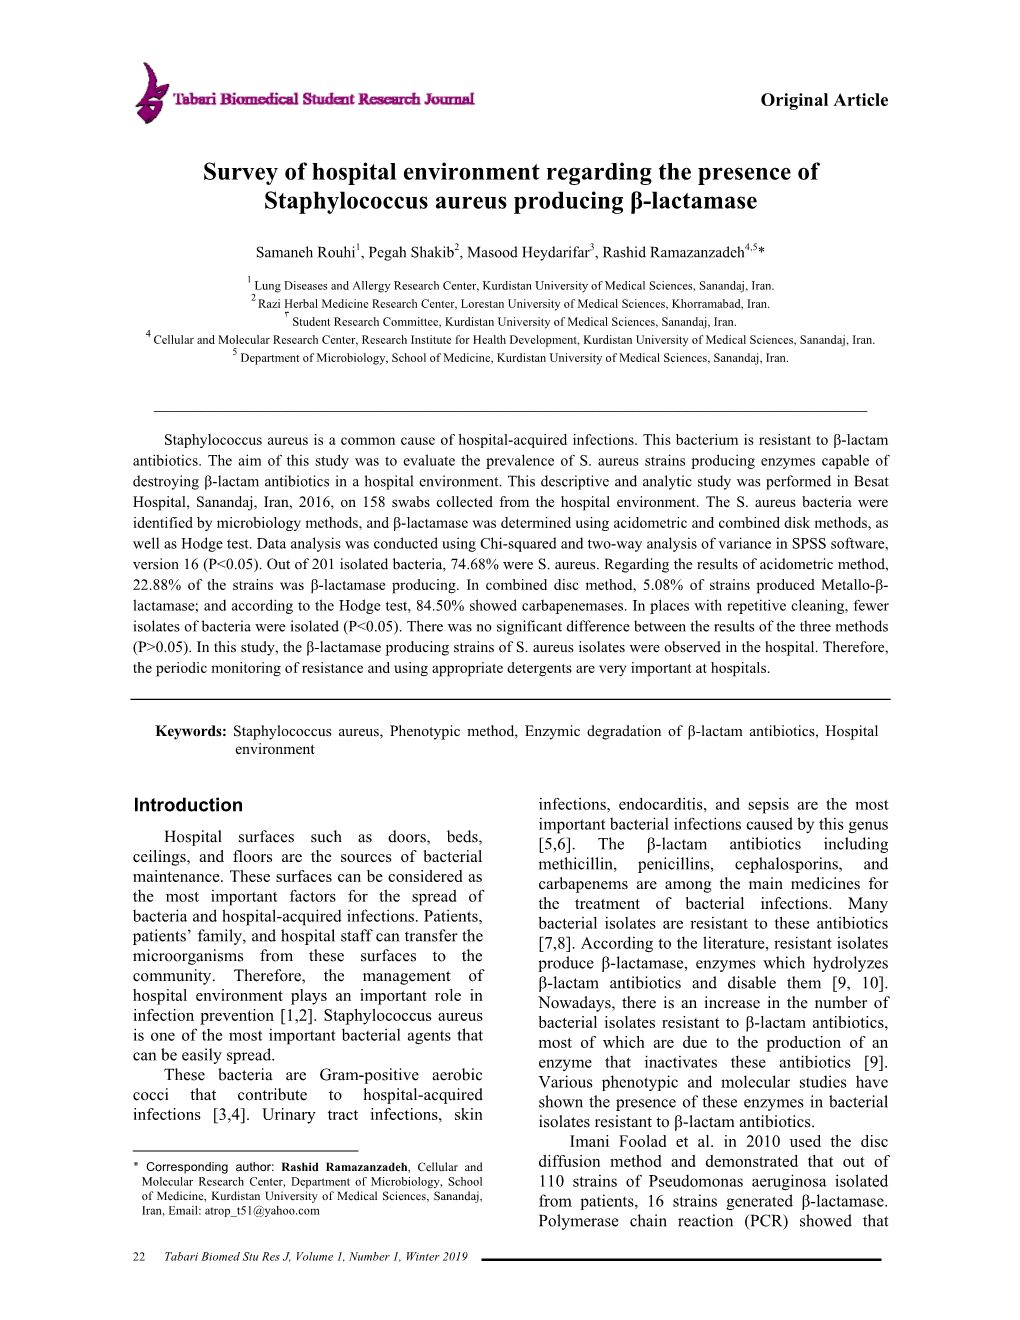 Survey of Hospital Environment Regarding the Presence of Staphylococcus Aureus Producing Β-Lactamase